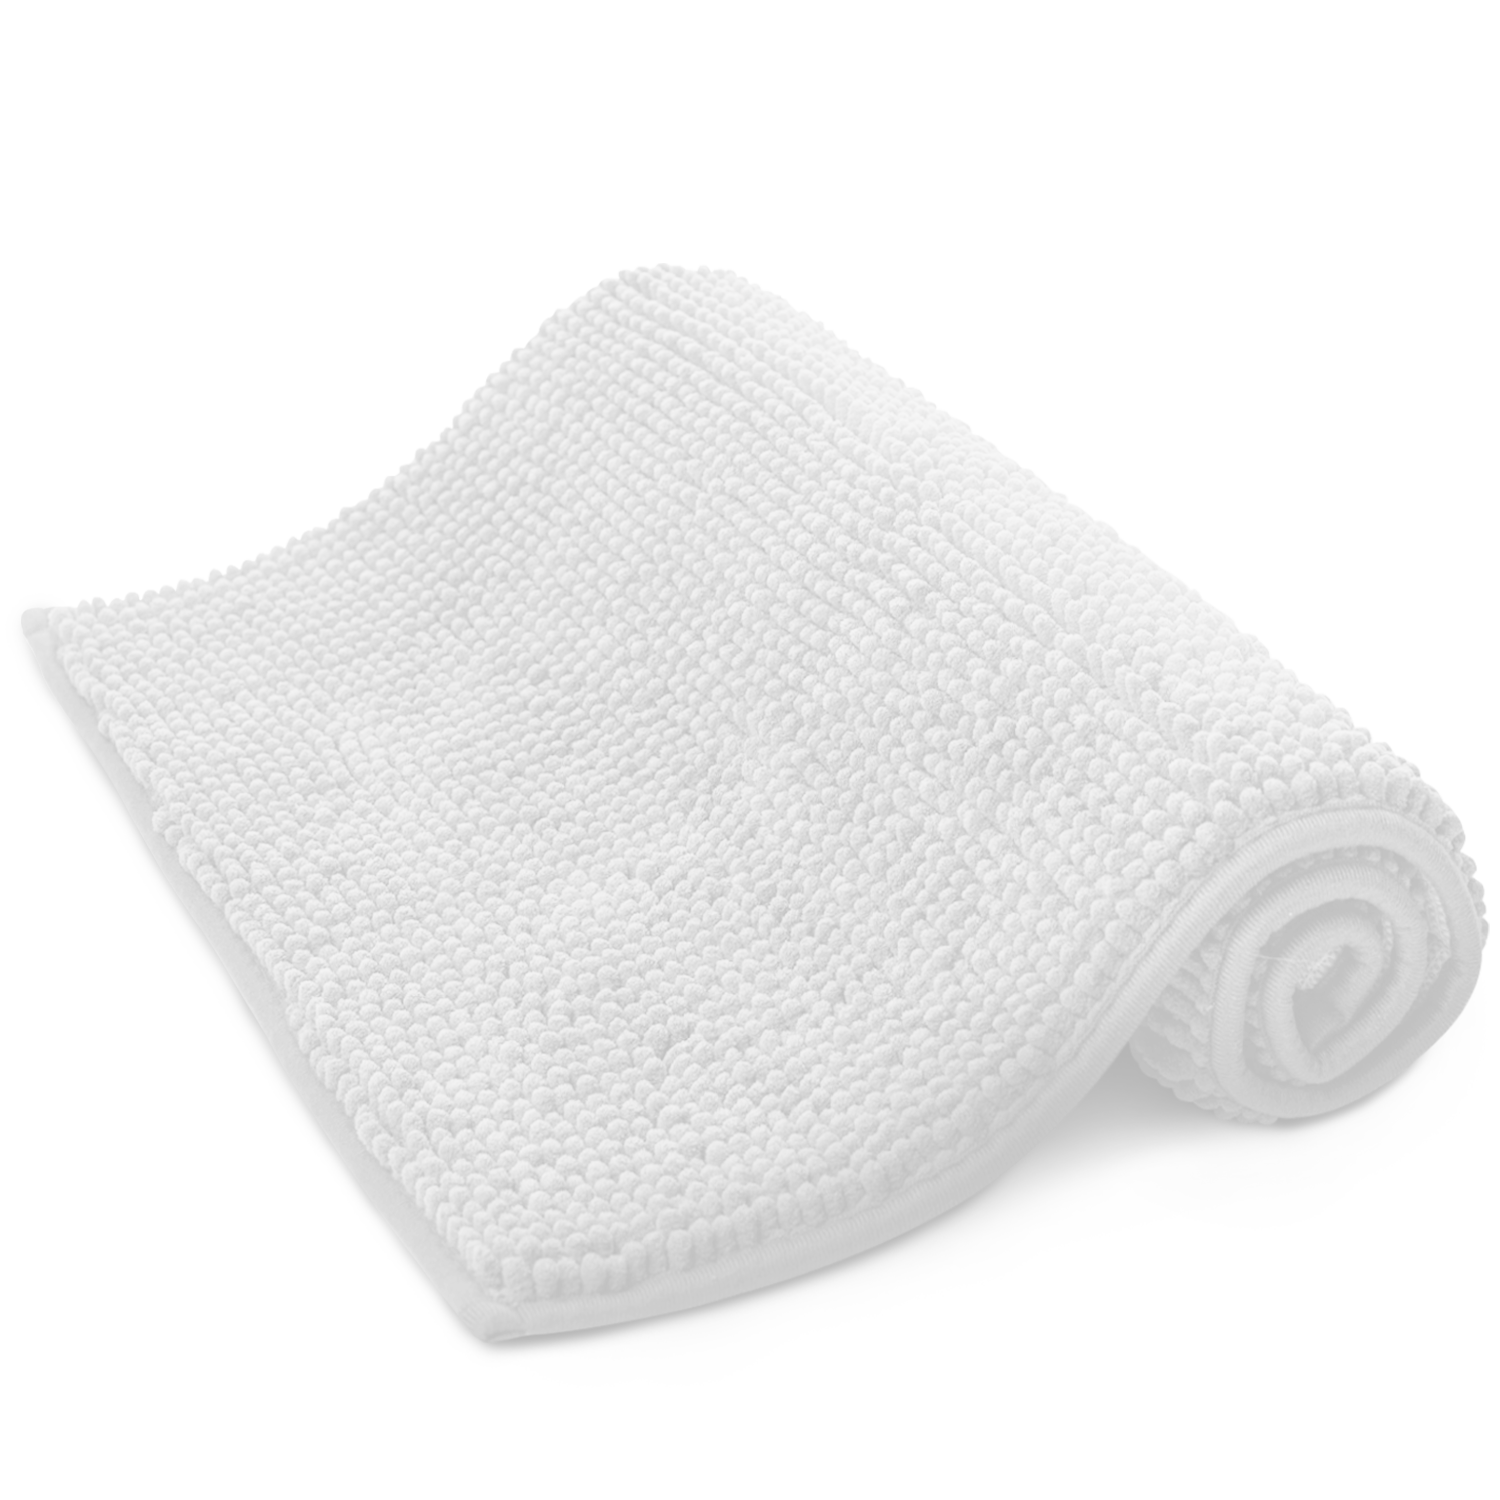 Buy Non-Slip Microfiber Bath Mat - Hygienic & Quick-Drying - UK